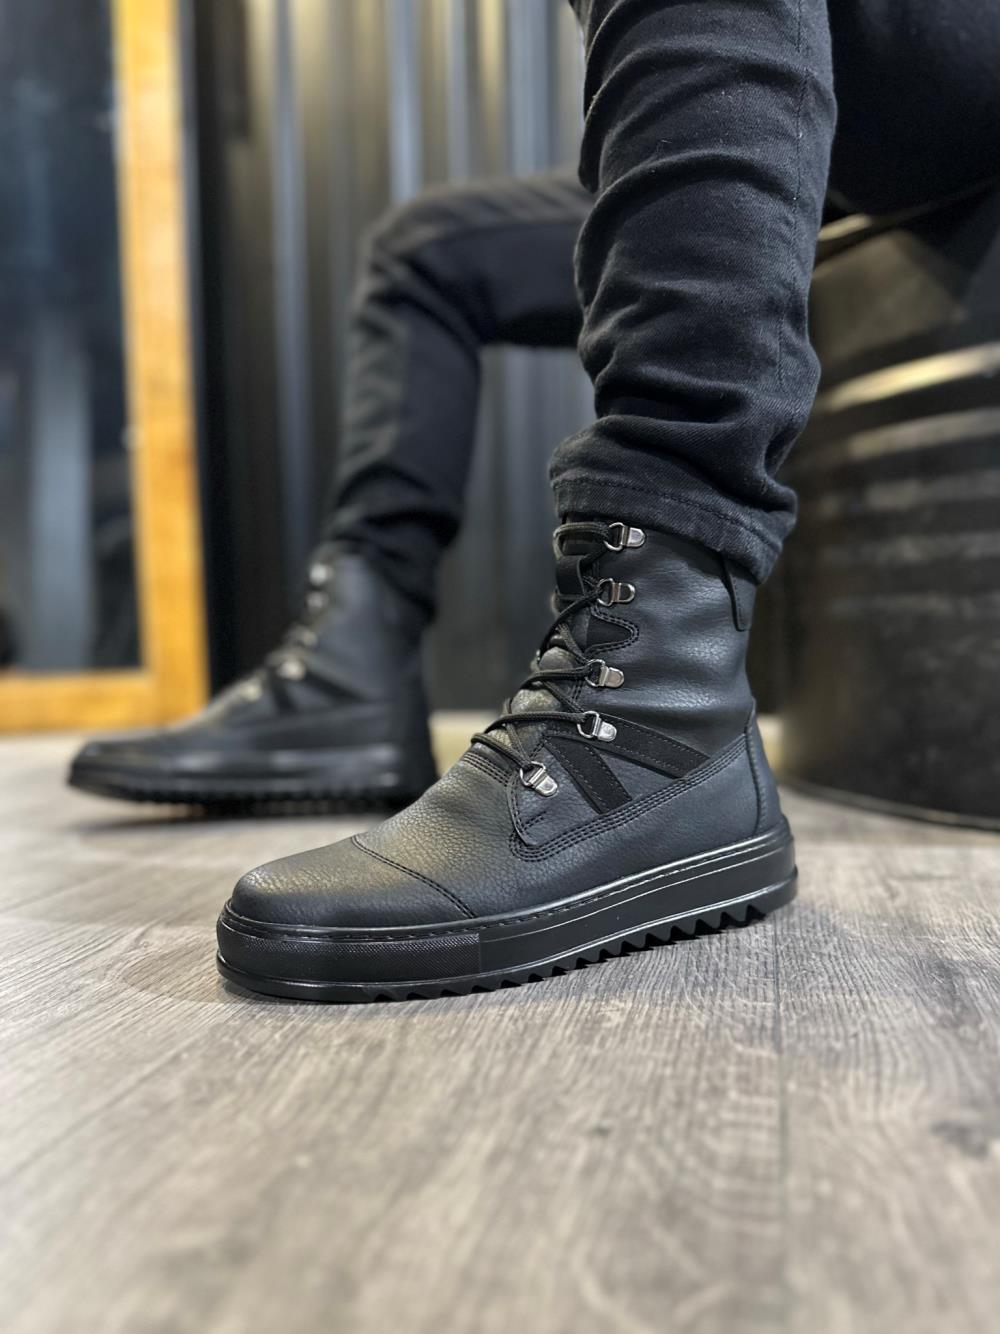 Men's Sports Boots B12 Black (Black Sole) - STREETMODE ™